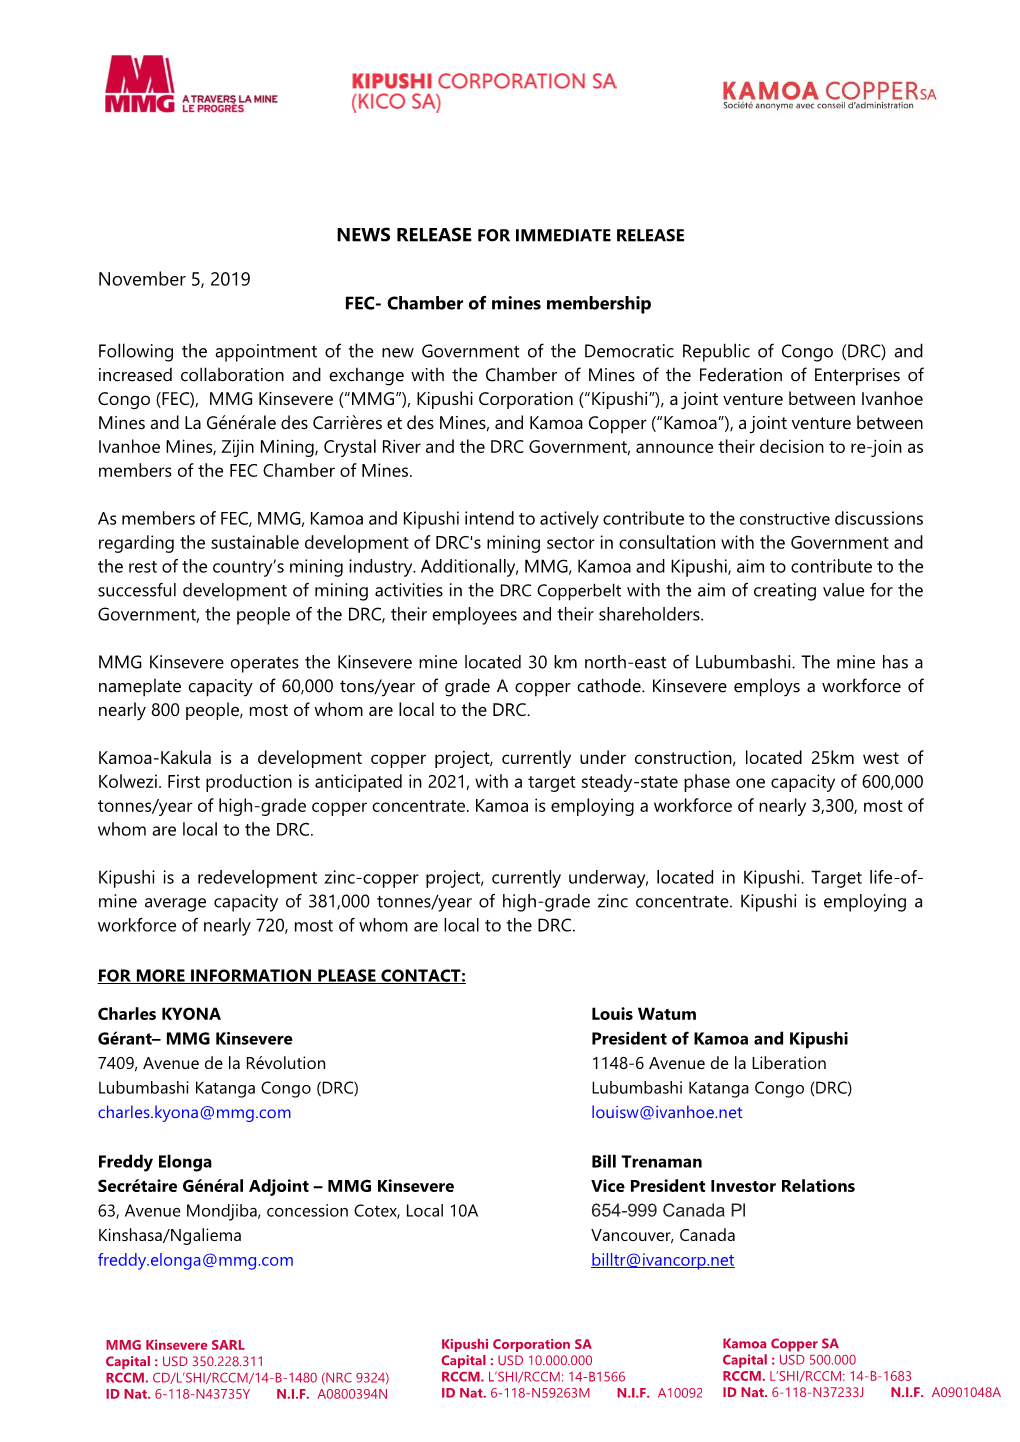 MMG Kinsevere Media Release – FEC Chamber of Mines Membership